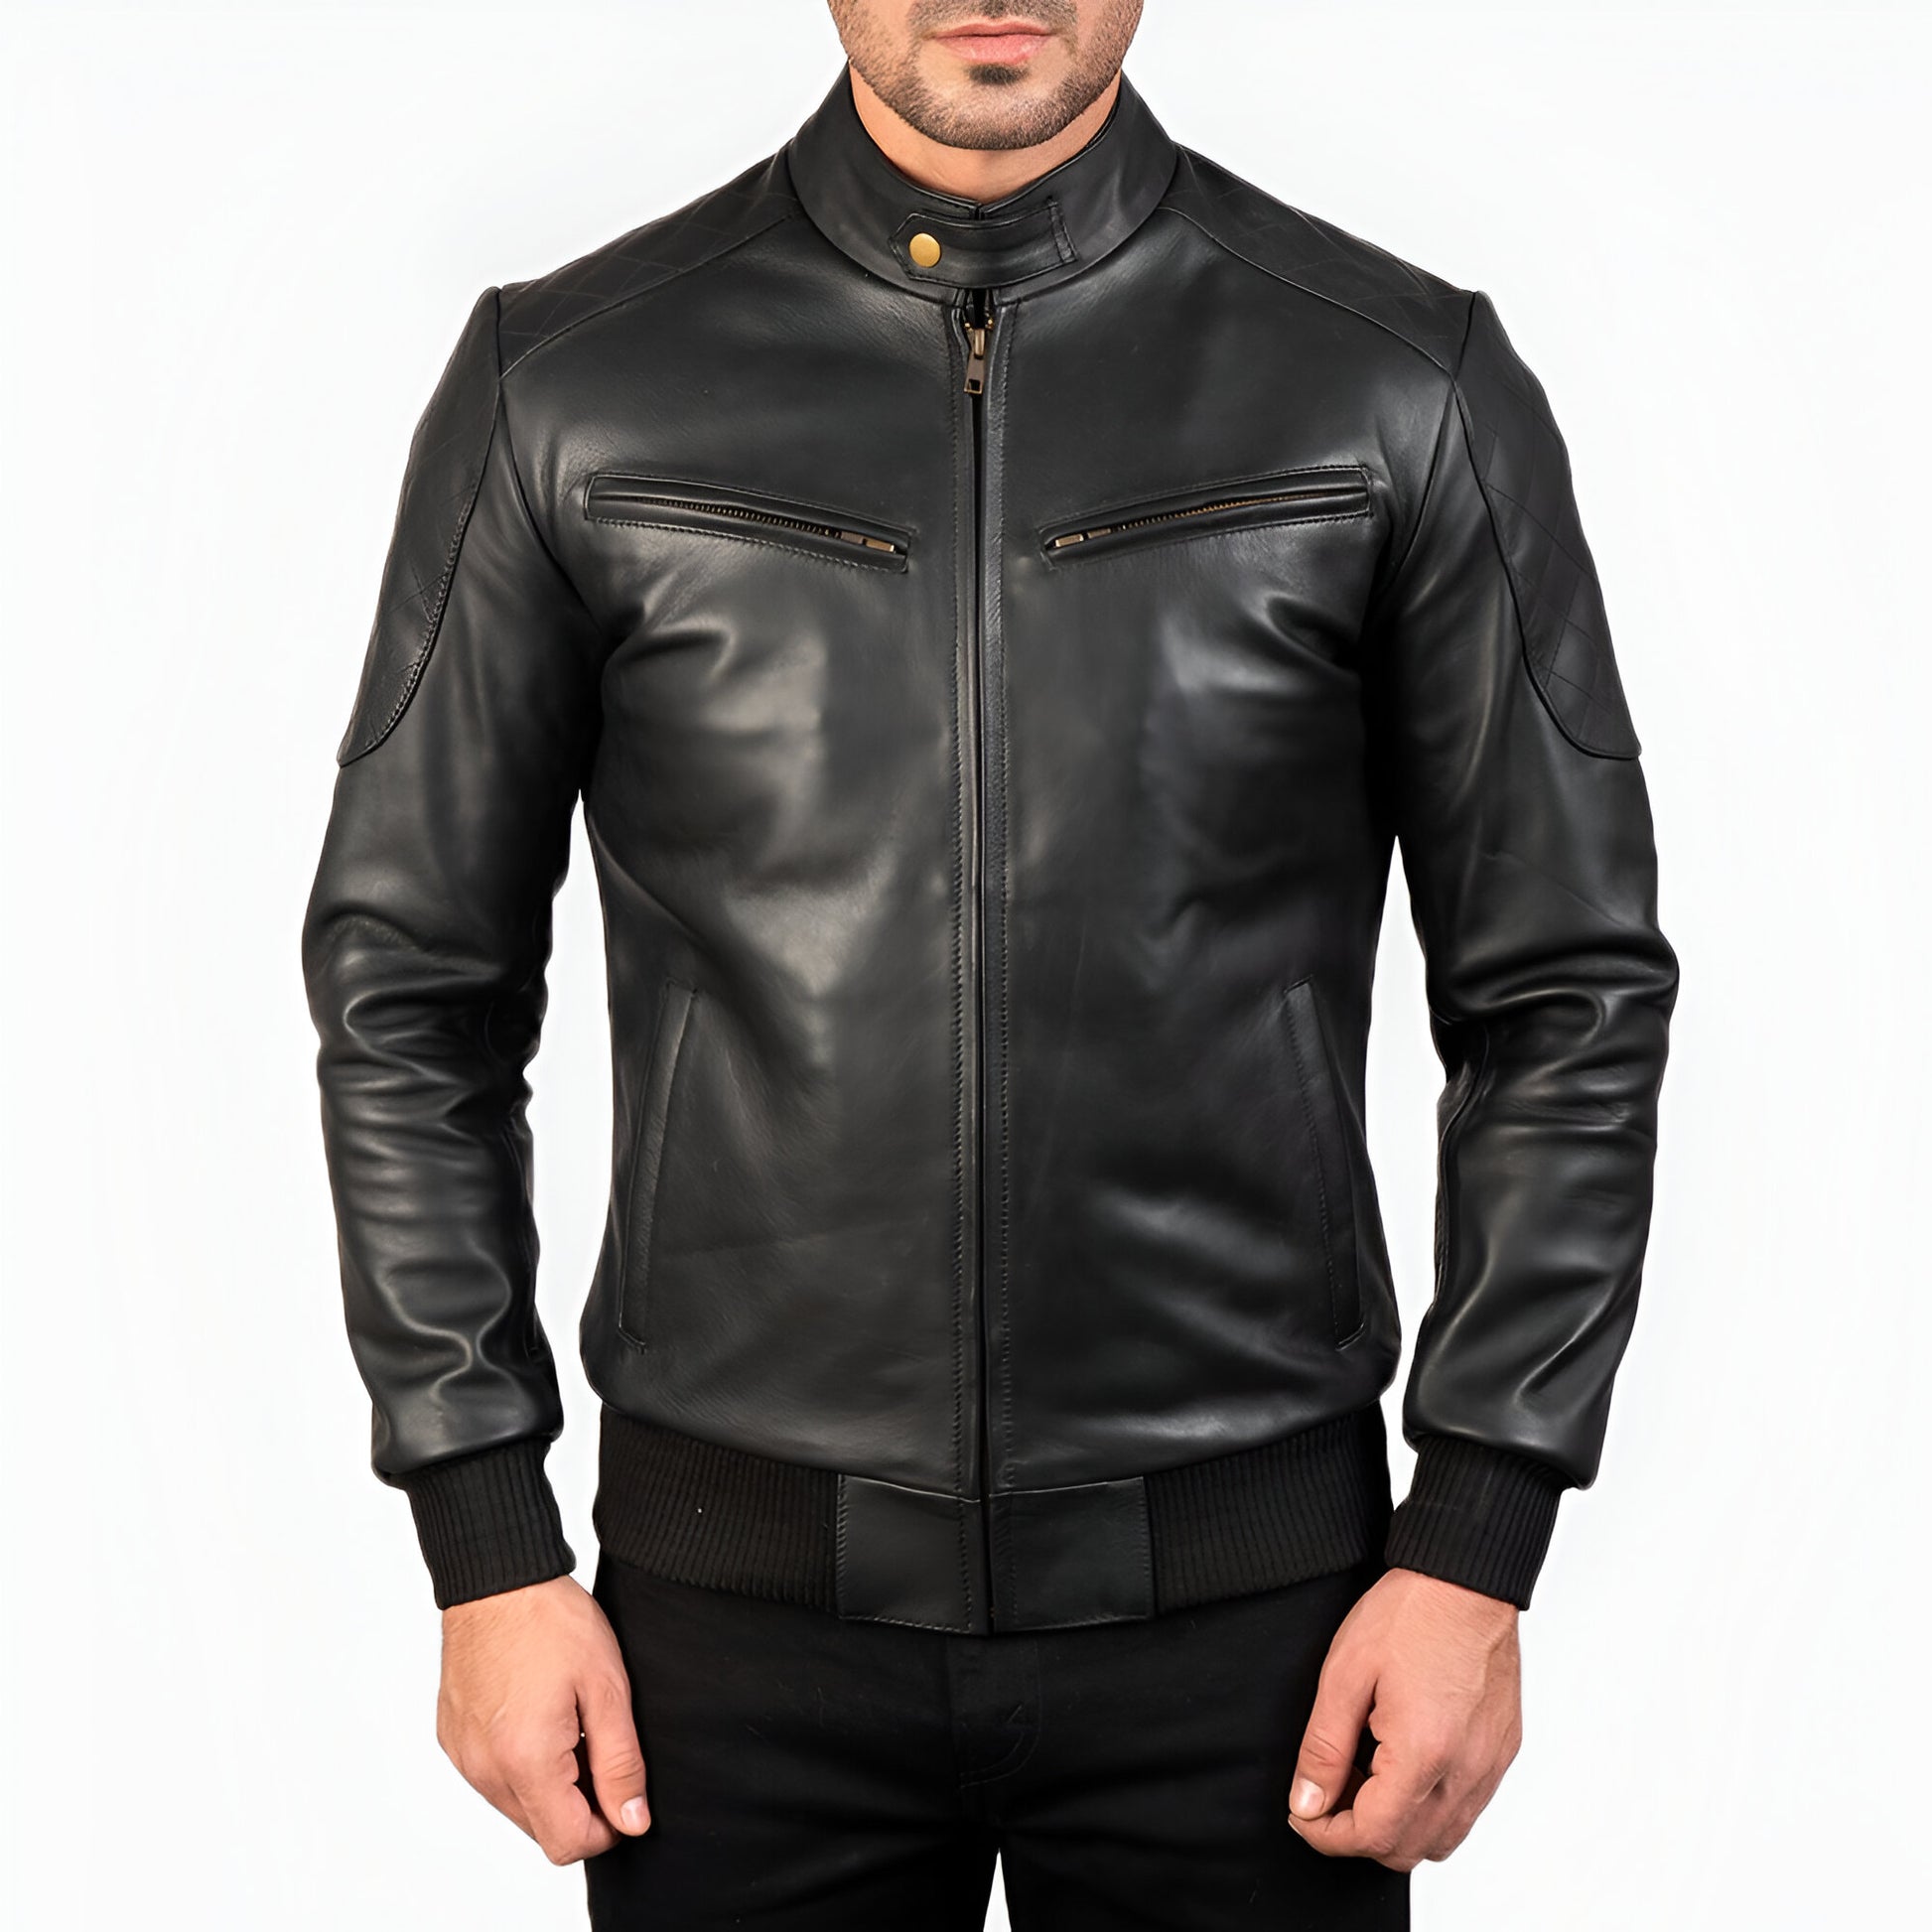 Dicks Leather Premium Black Leather Bomber Jacket